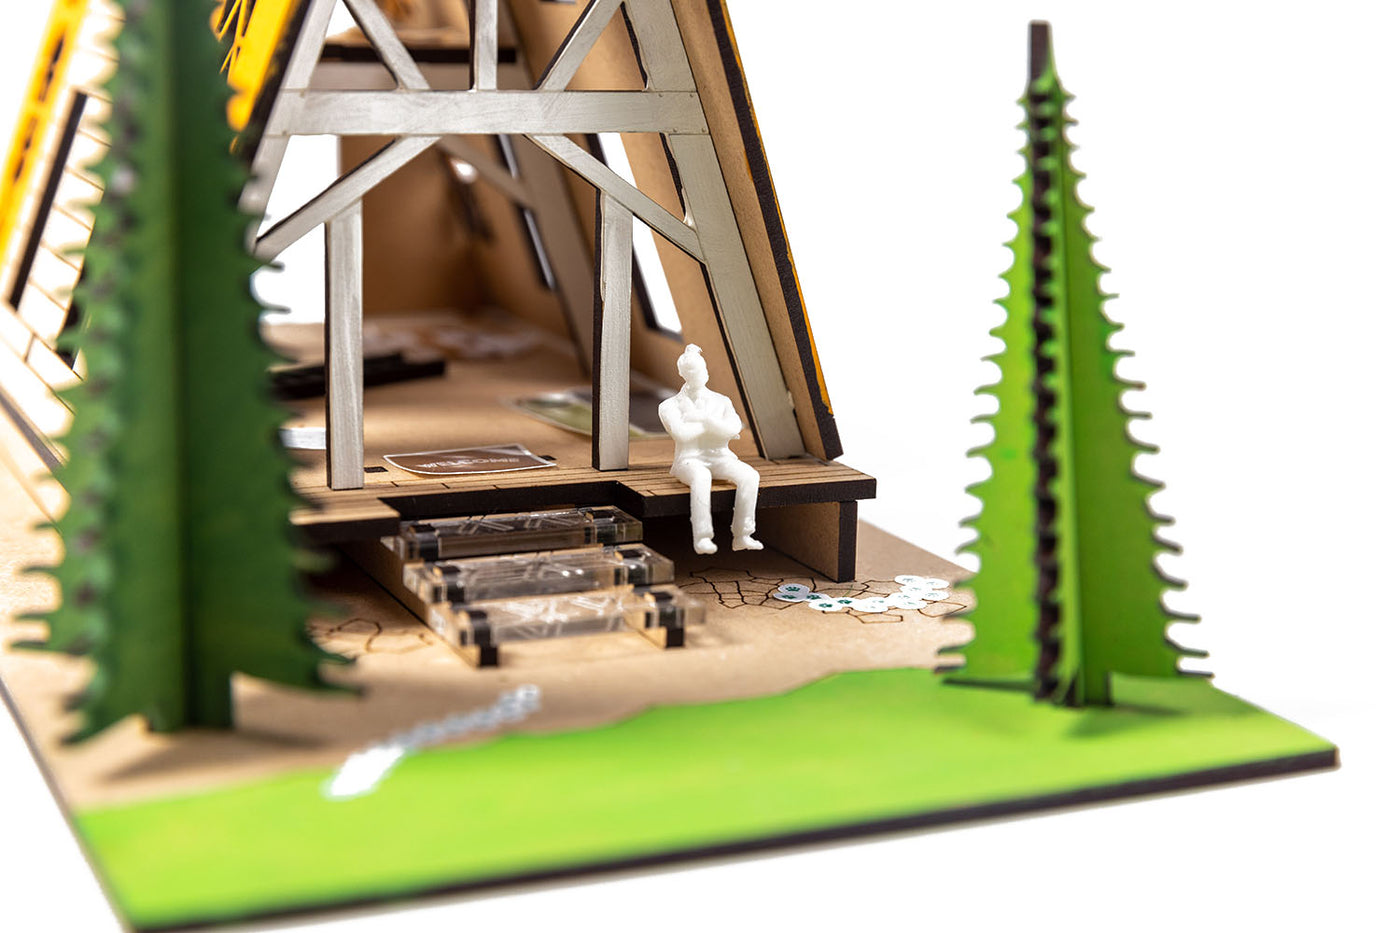 evergreen cabin stix+brix architecture kits for kids